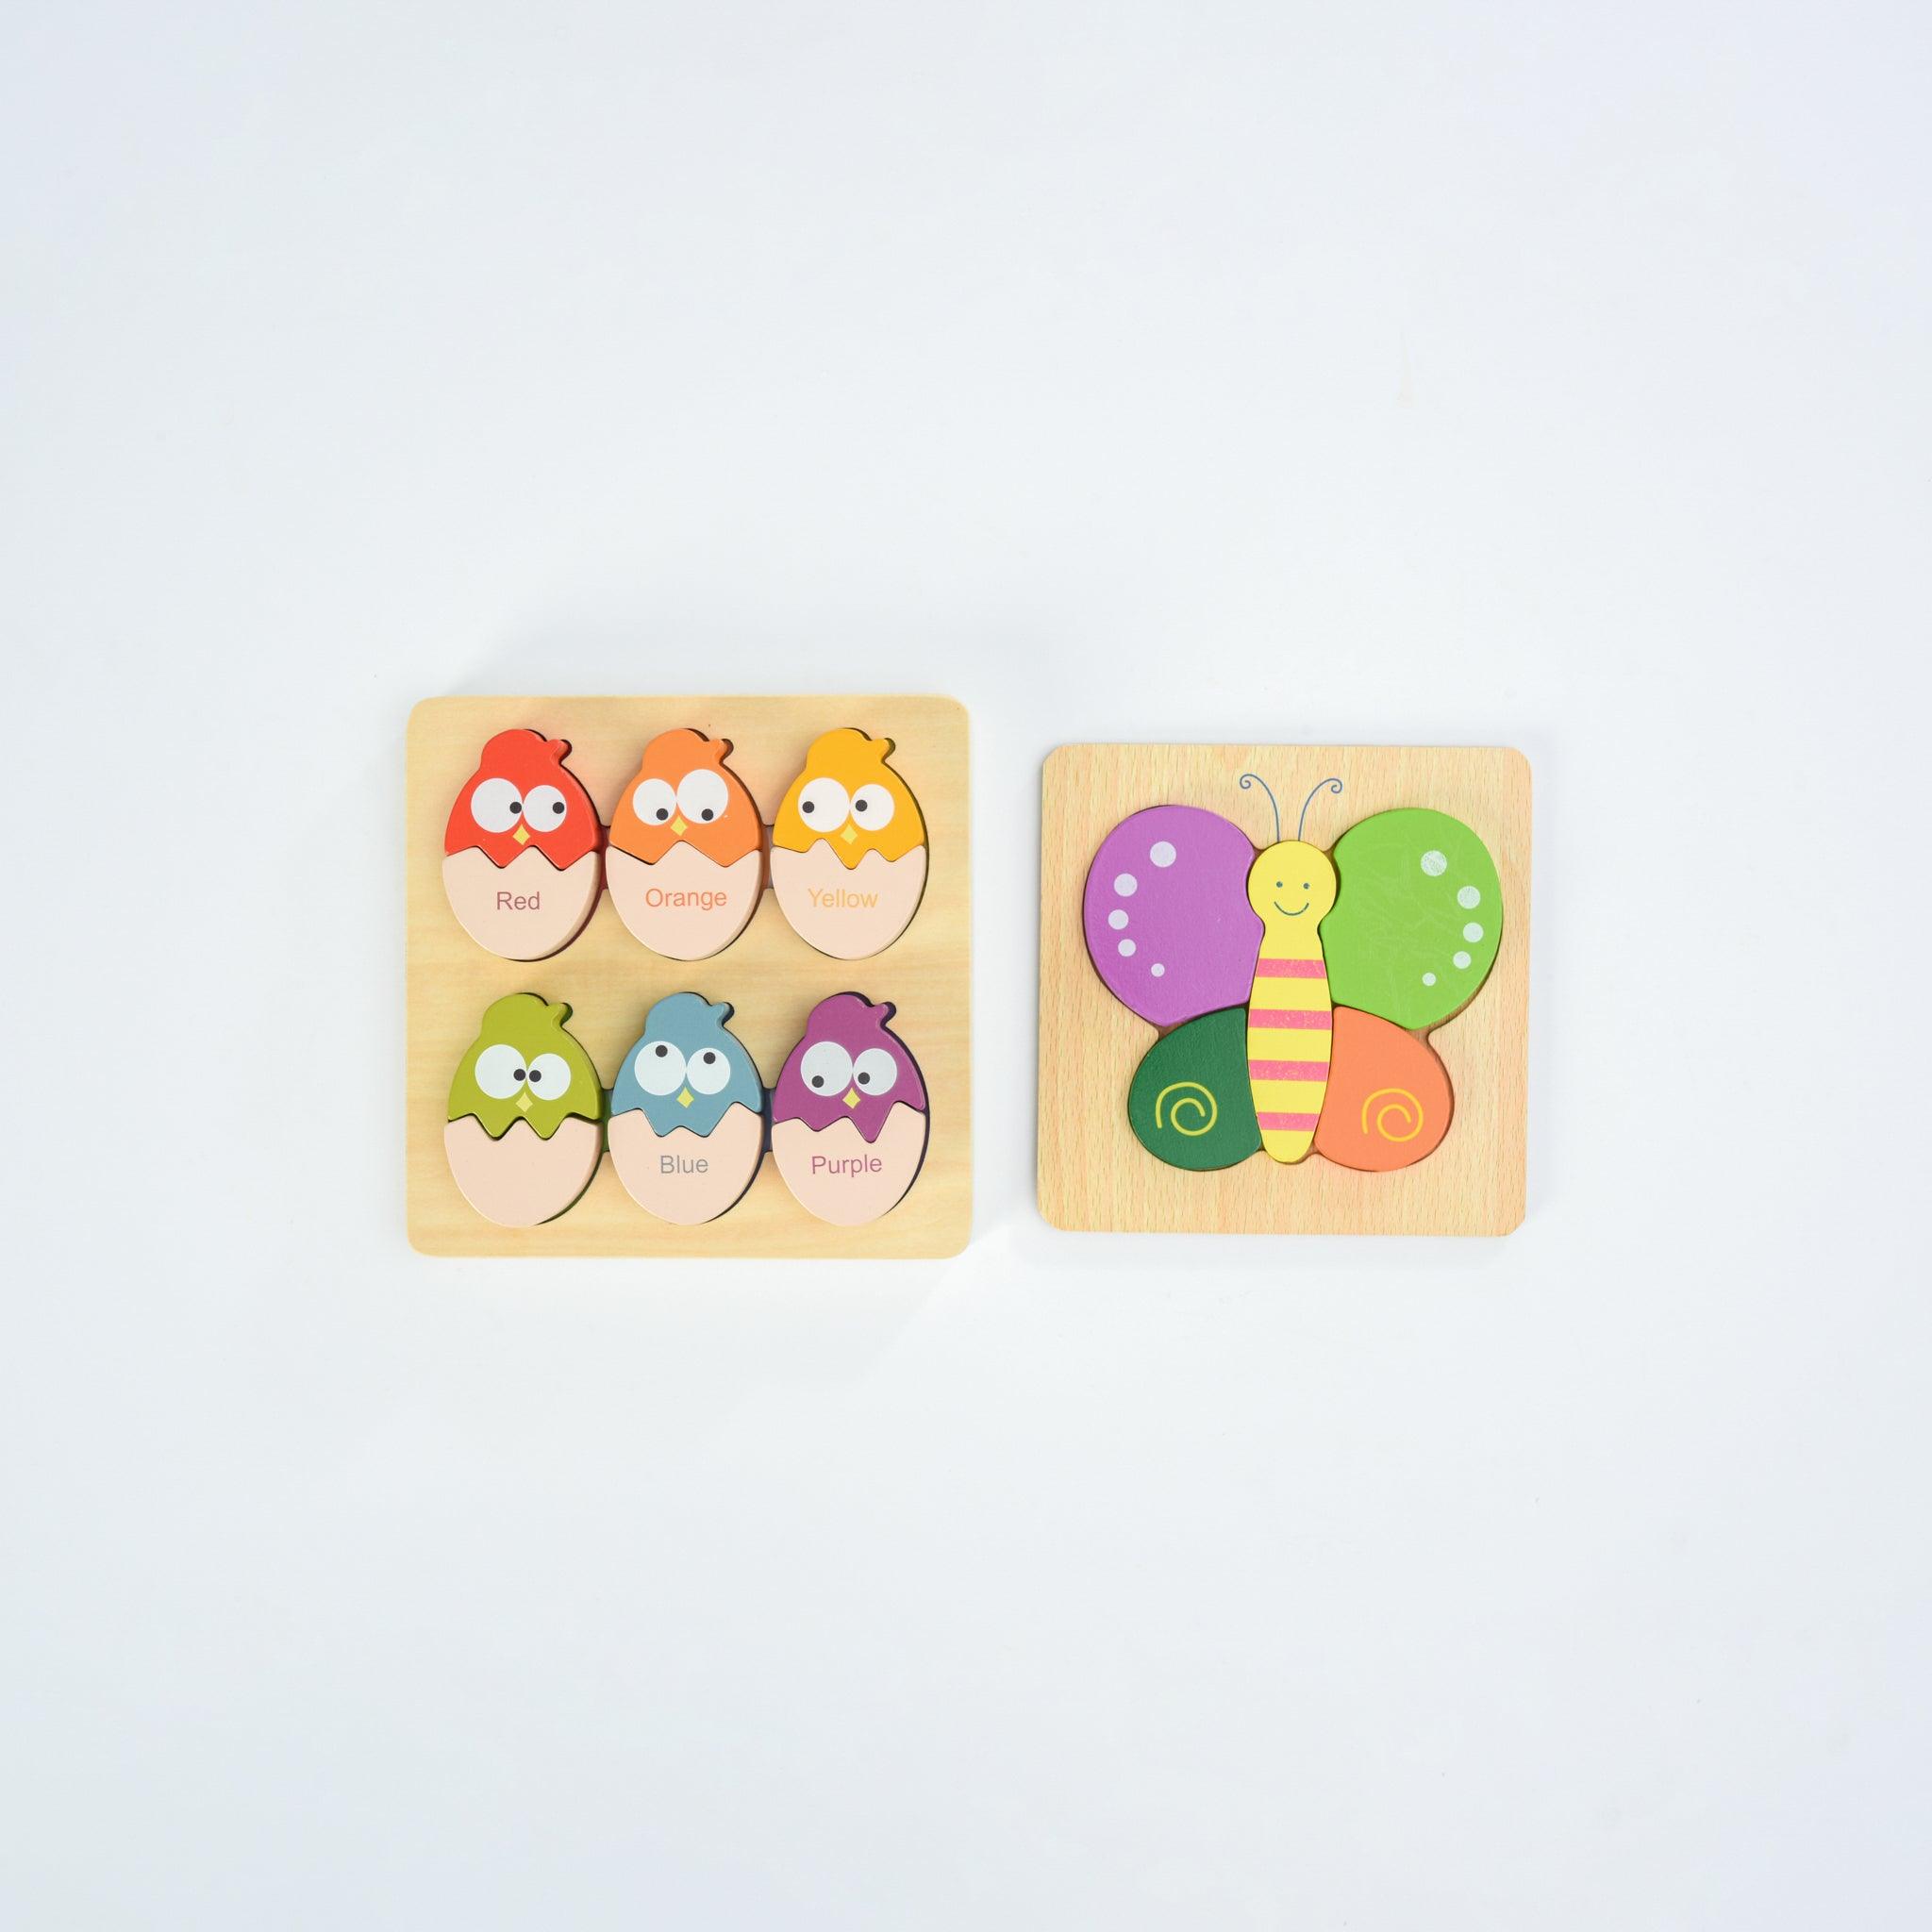 colour-puzzle-match-combo-educational-toys